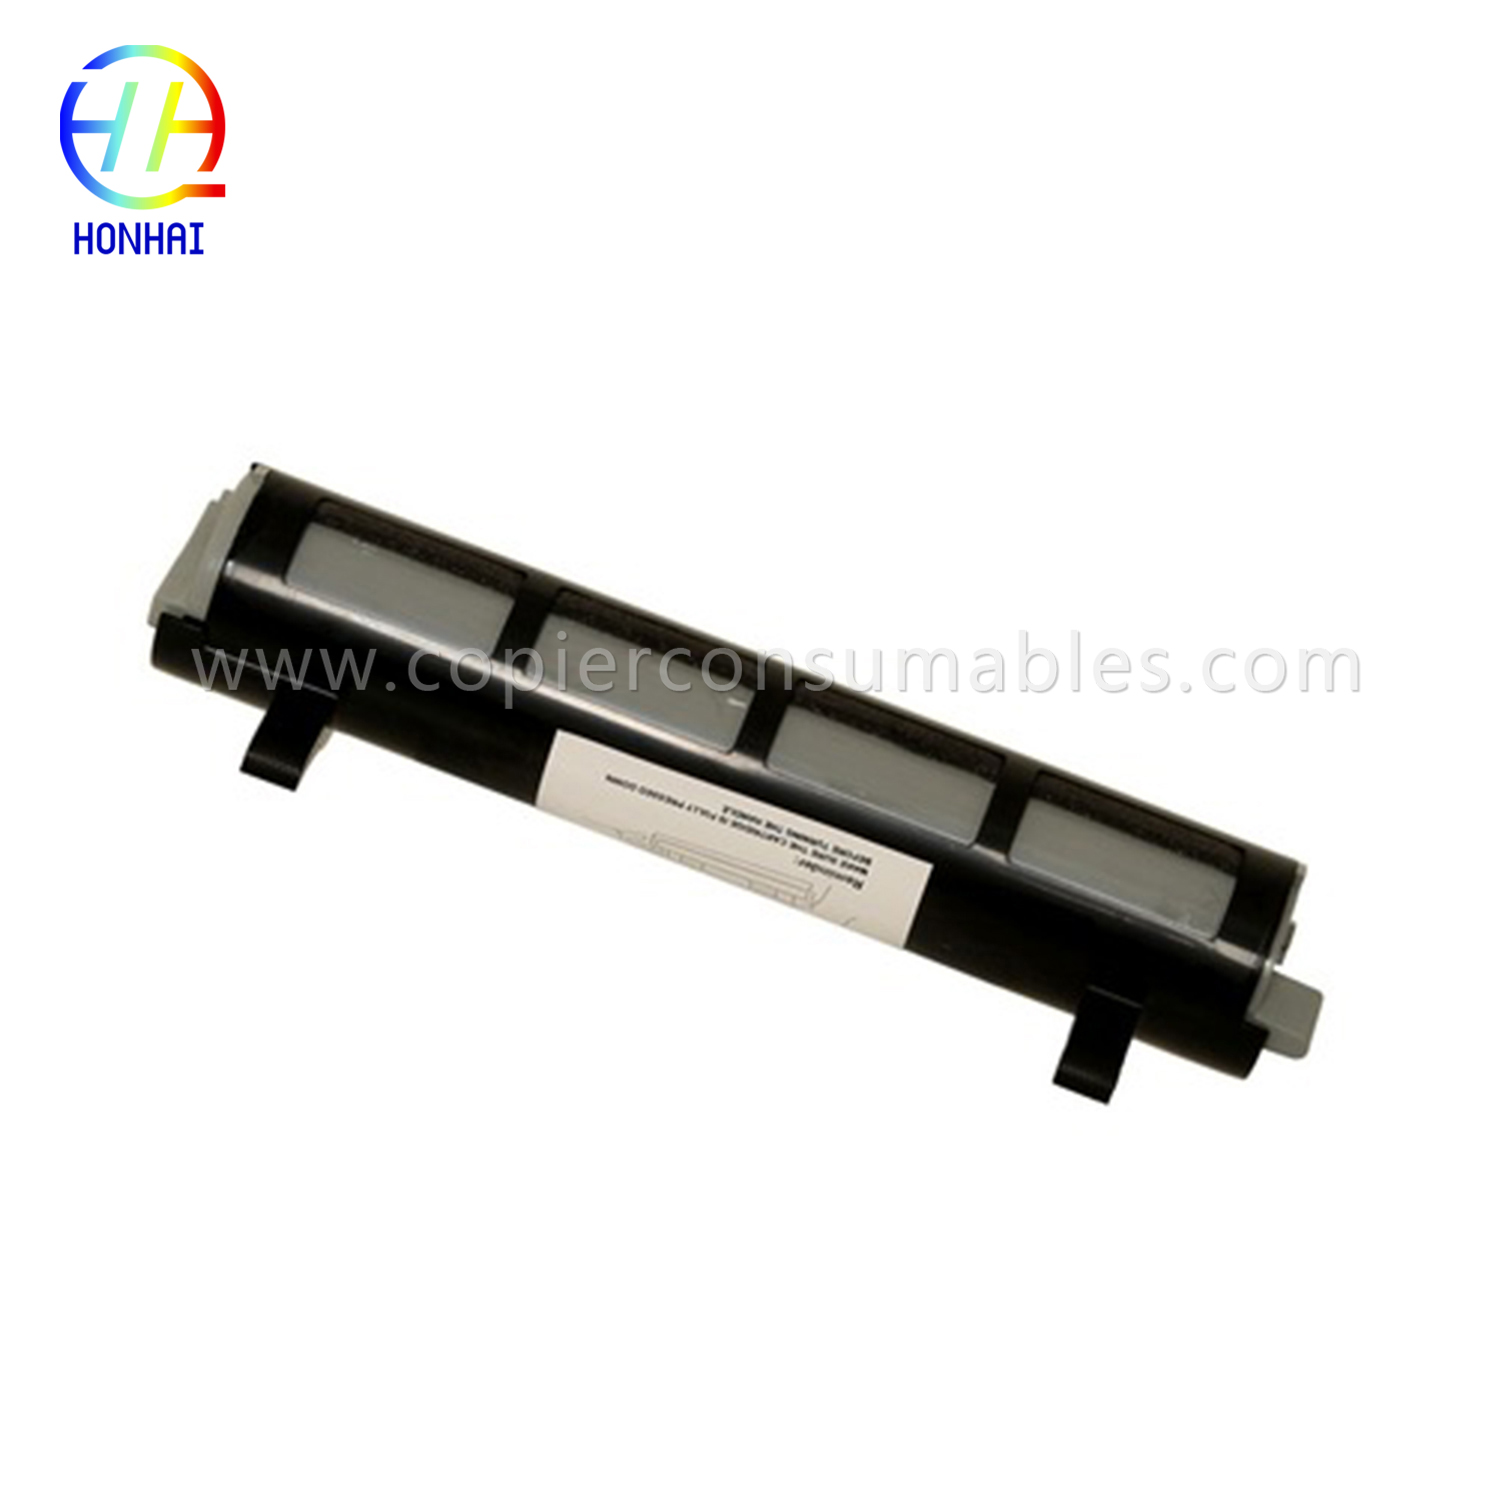 Black Toner Cartridge fir Panasonic Kx-FL511 Kx-Fa83 Kx-FL541 Kx-FL611 Kx-Flm651 Kx-Flm661 Kx-Flm671